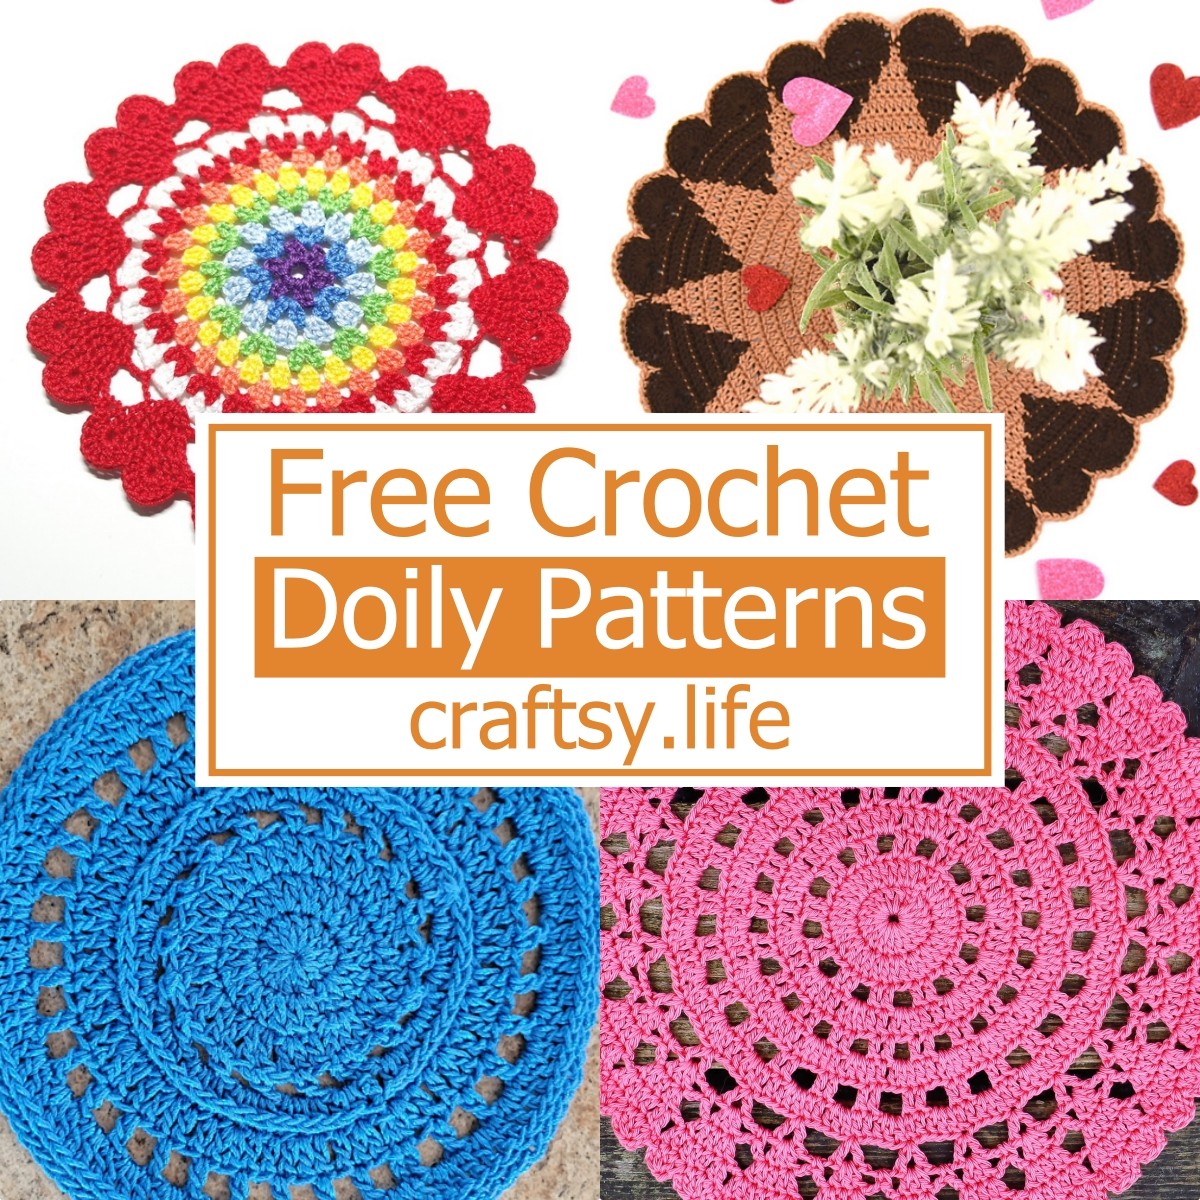 5 Free Crochet Doily Patterns